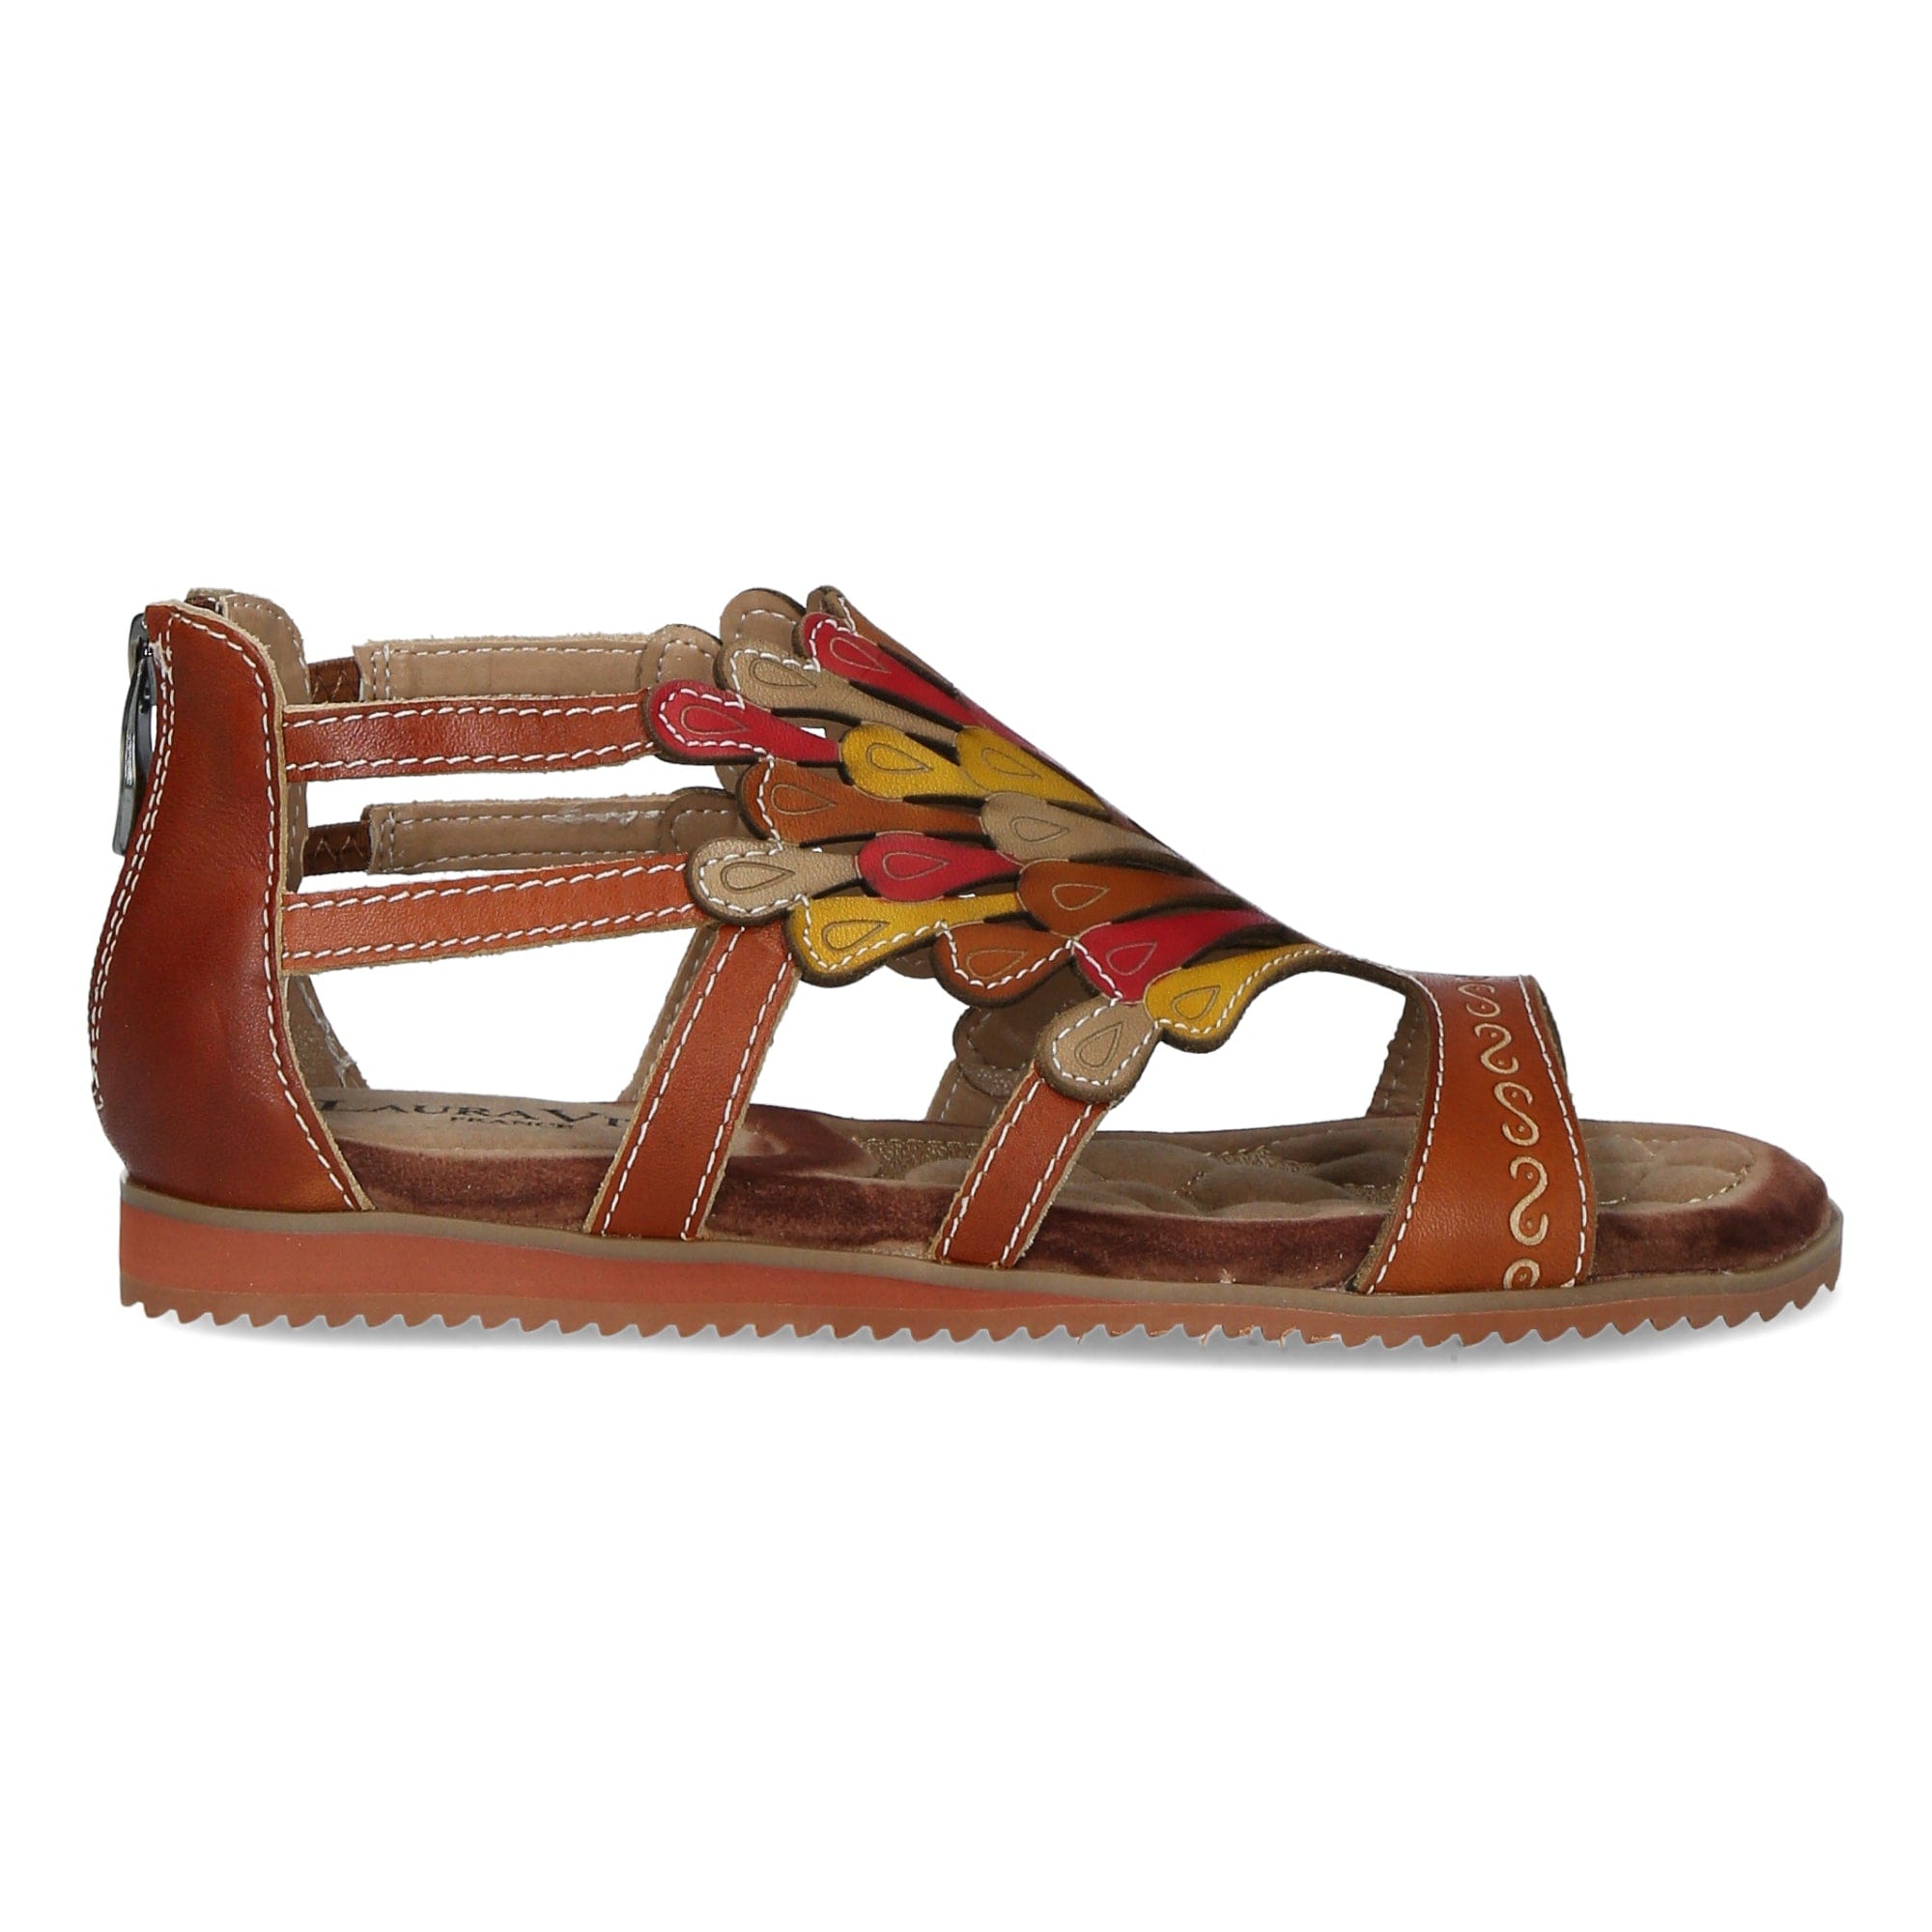 Zapatos VACA - 35 / Camel - Sandalia